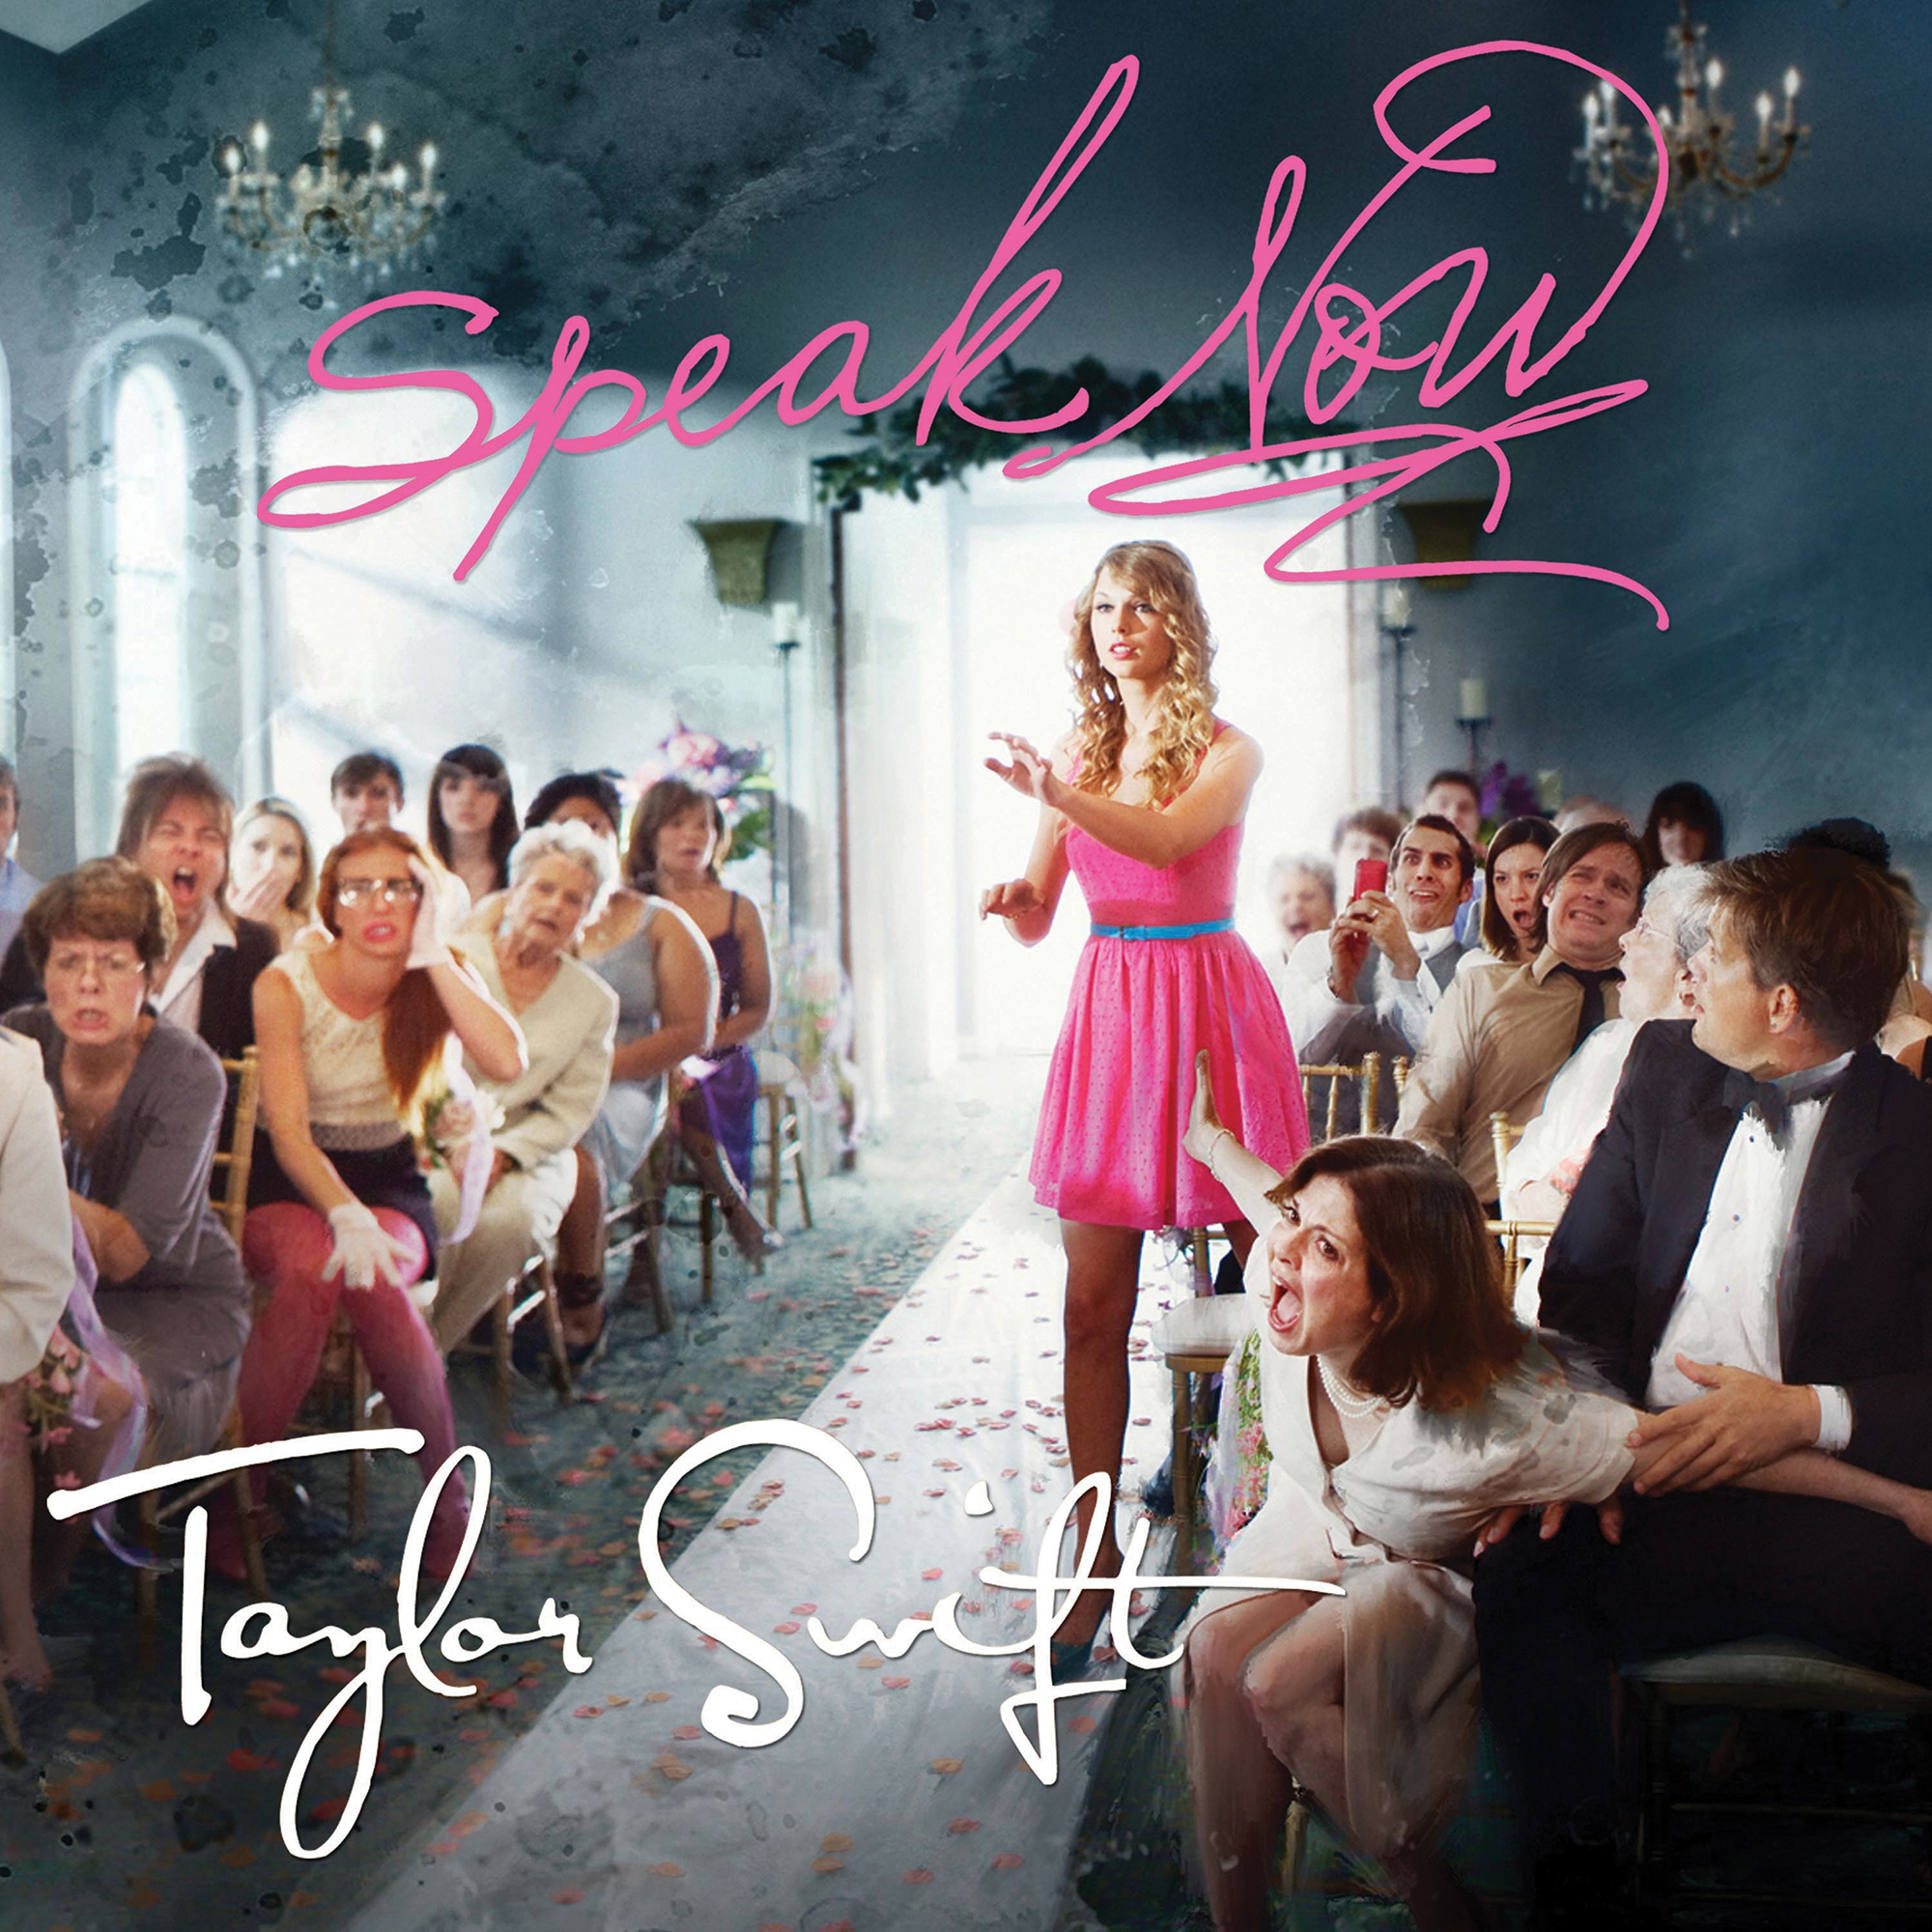 Swift Lyrics: Analyzing Speak Now (Taylor's Version)